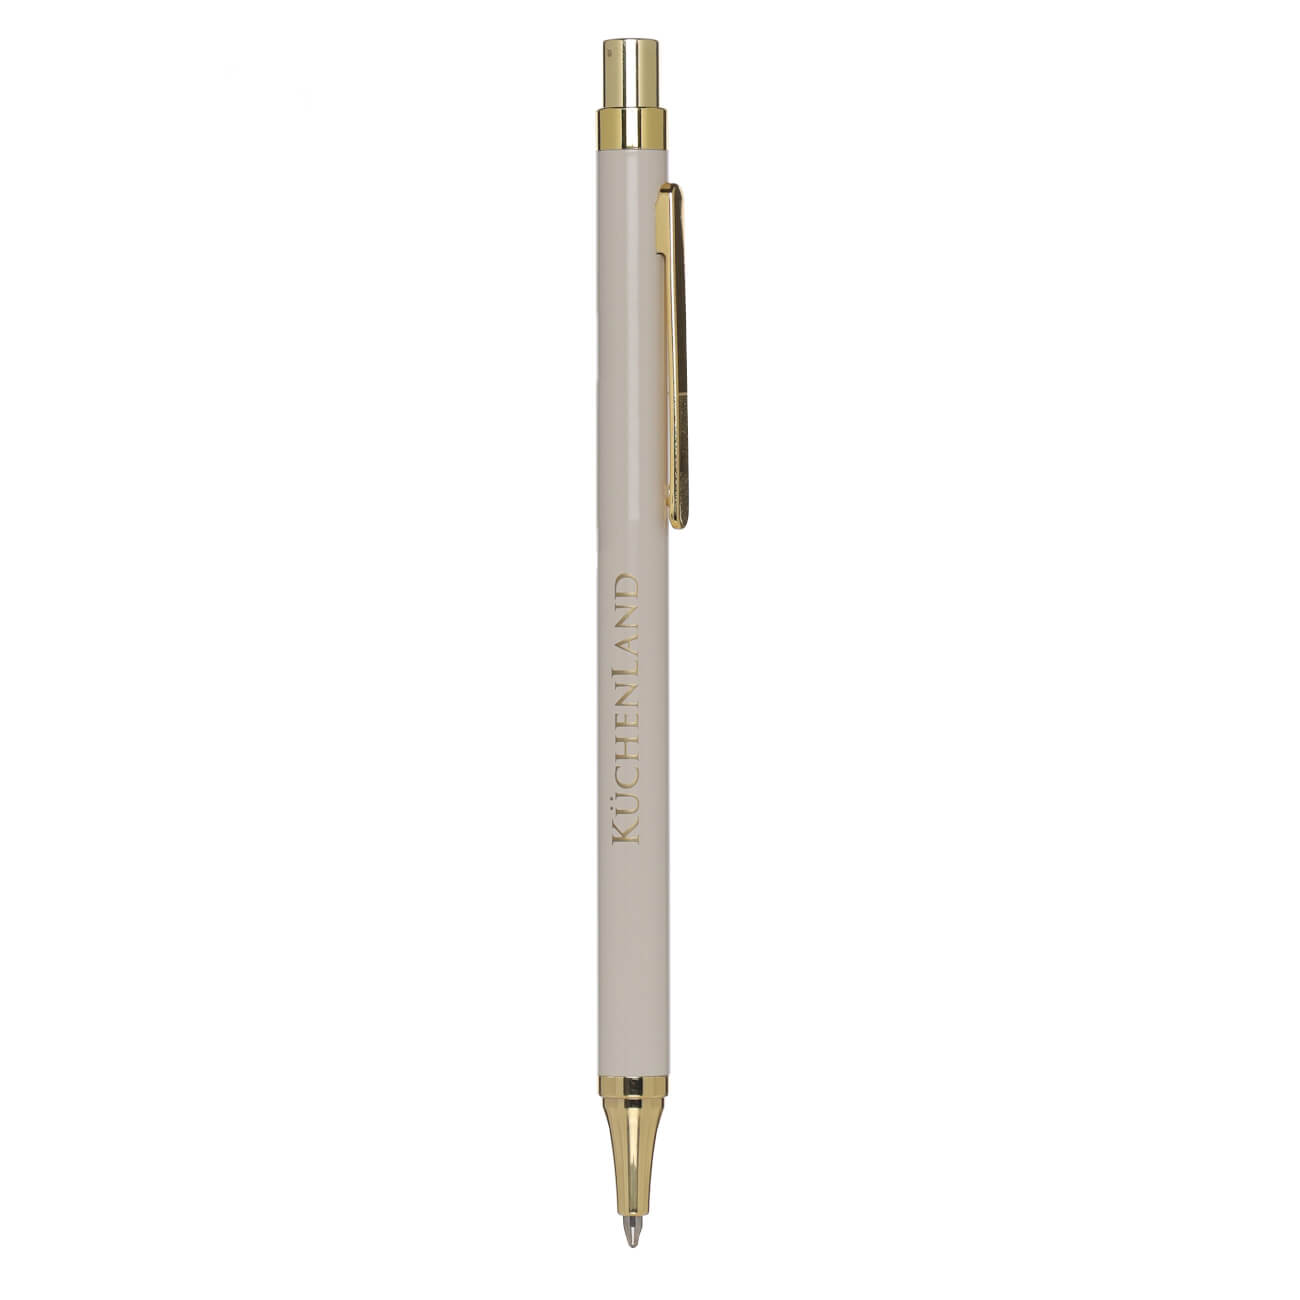 Ручка шариковая, 14 см, металл/пластик, бежевая, Eclipse ручка скоба cappio м о 96 мм